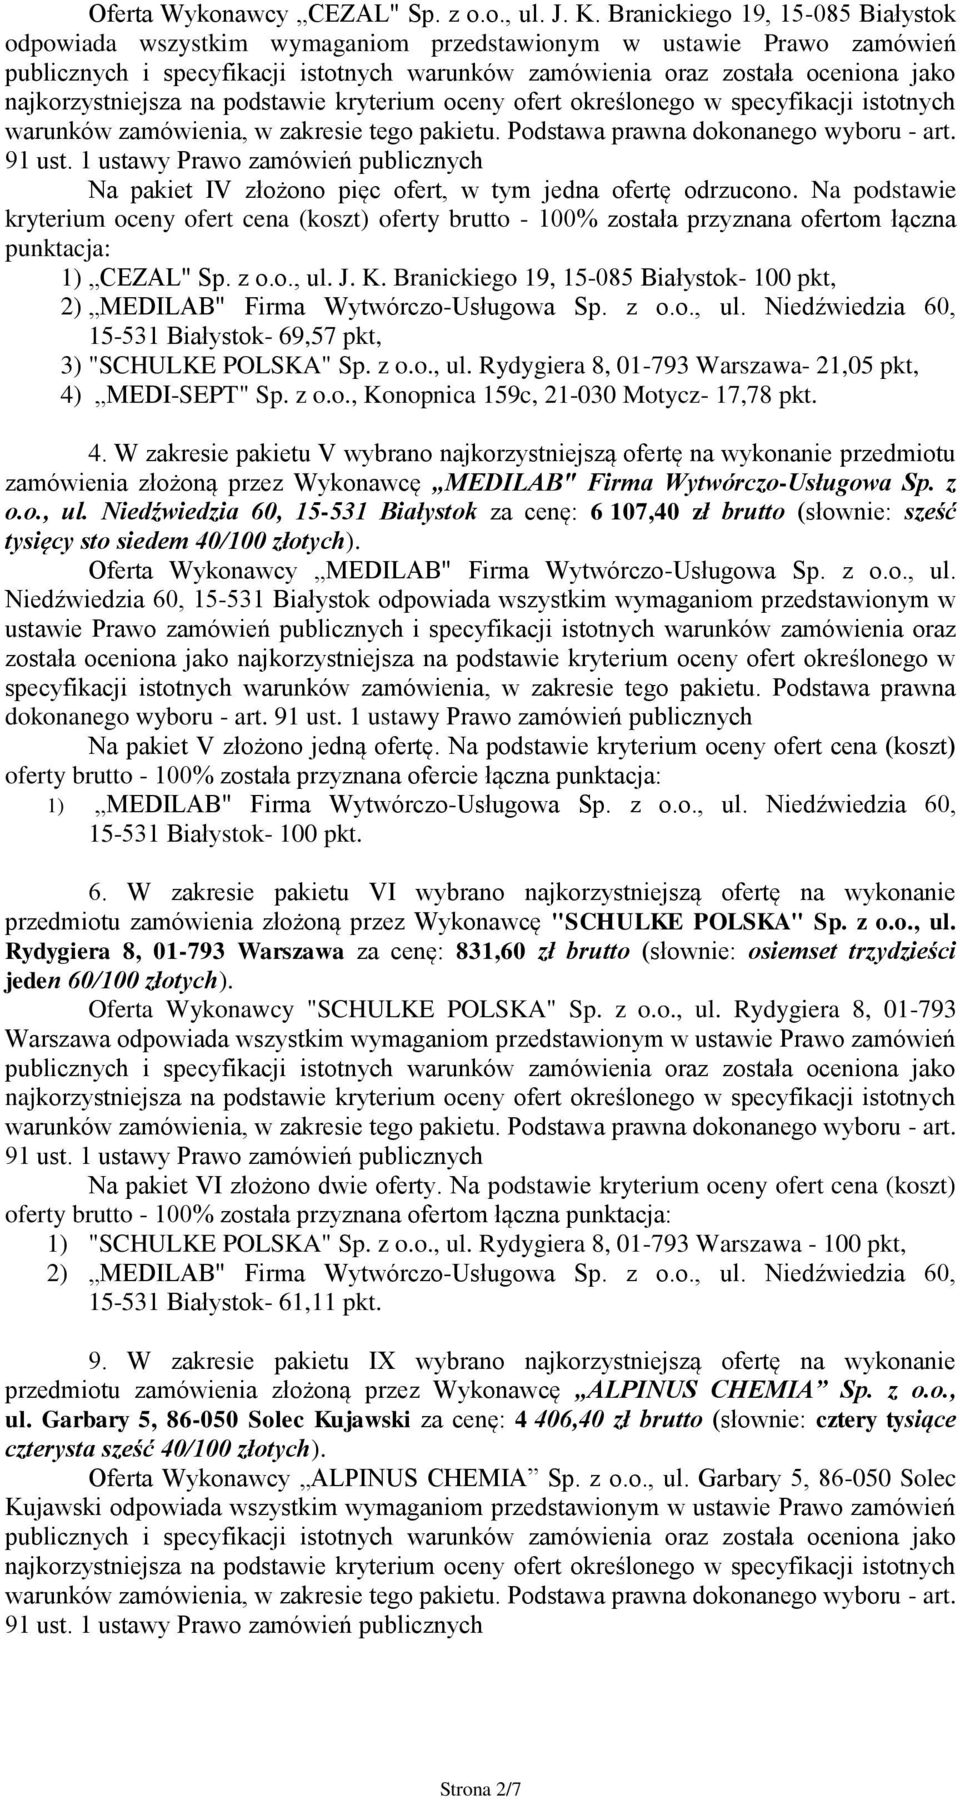 MEDI-SEPT" Sp. z o.o., Konopnica 159c, 21-030 Motycz- 17,78 pkt. 4.